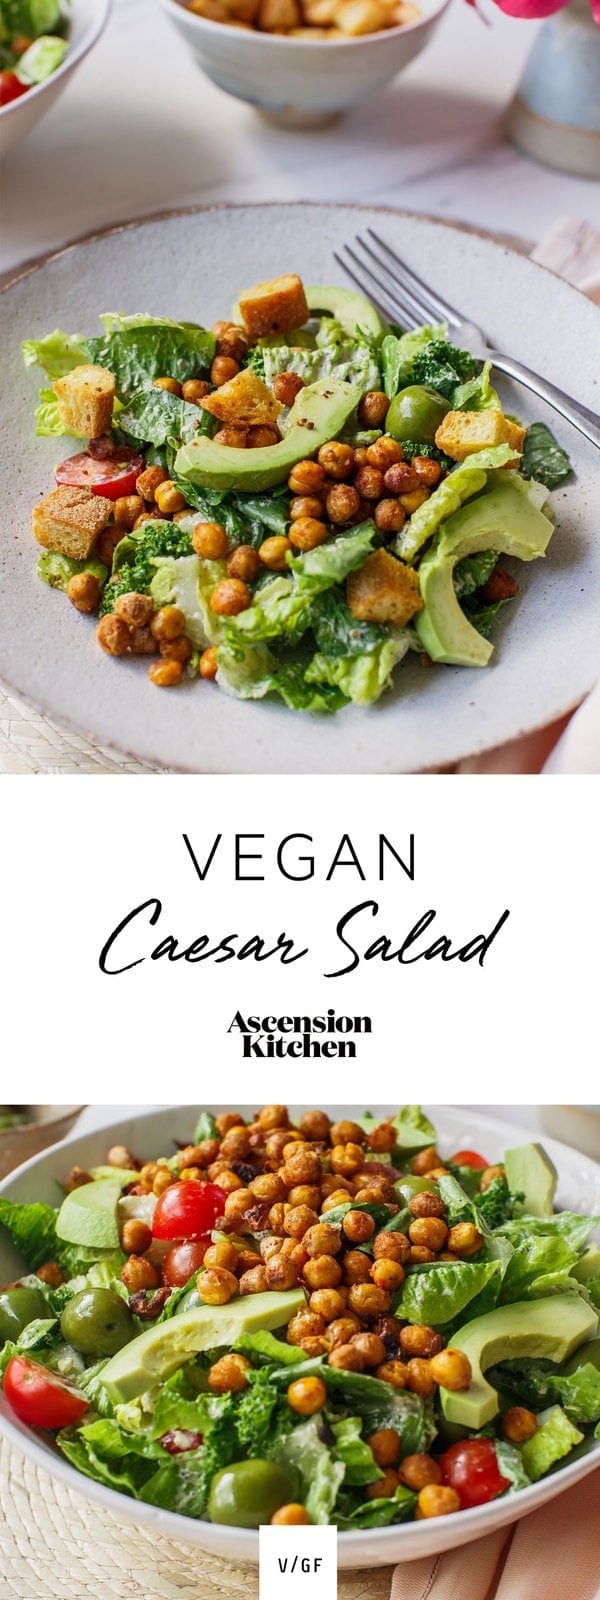 Vegan Caesar Salad with Chickpea Croutons - gluten free